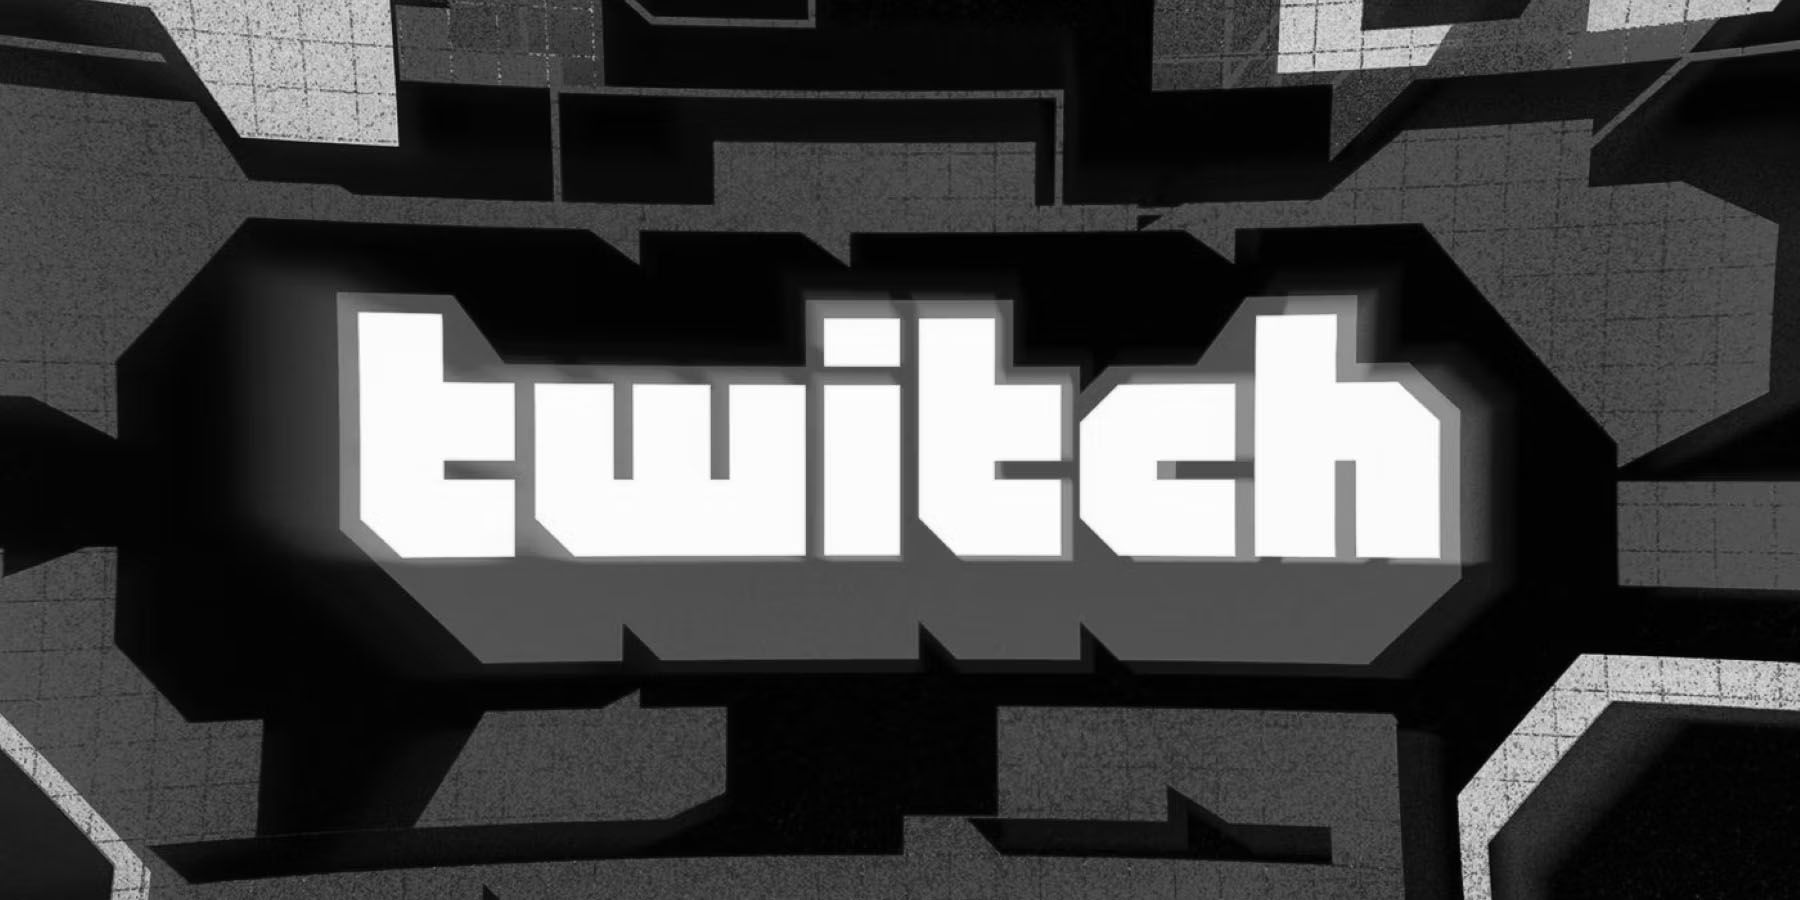 A screenshot of a Twitch logo in grayscale.